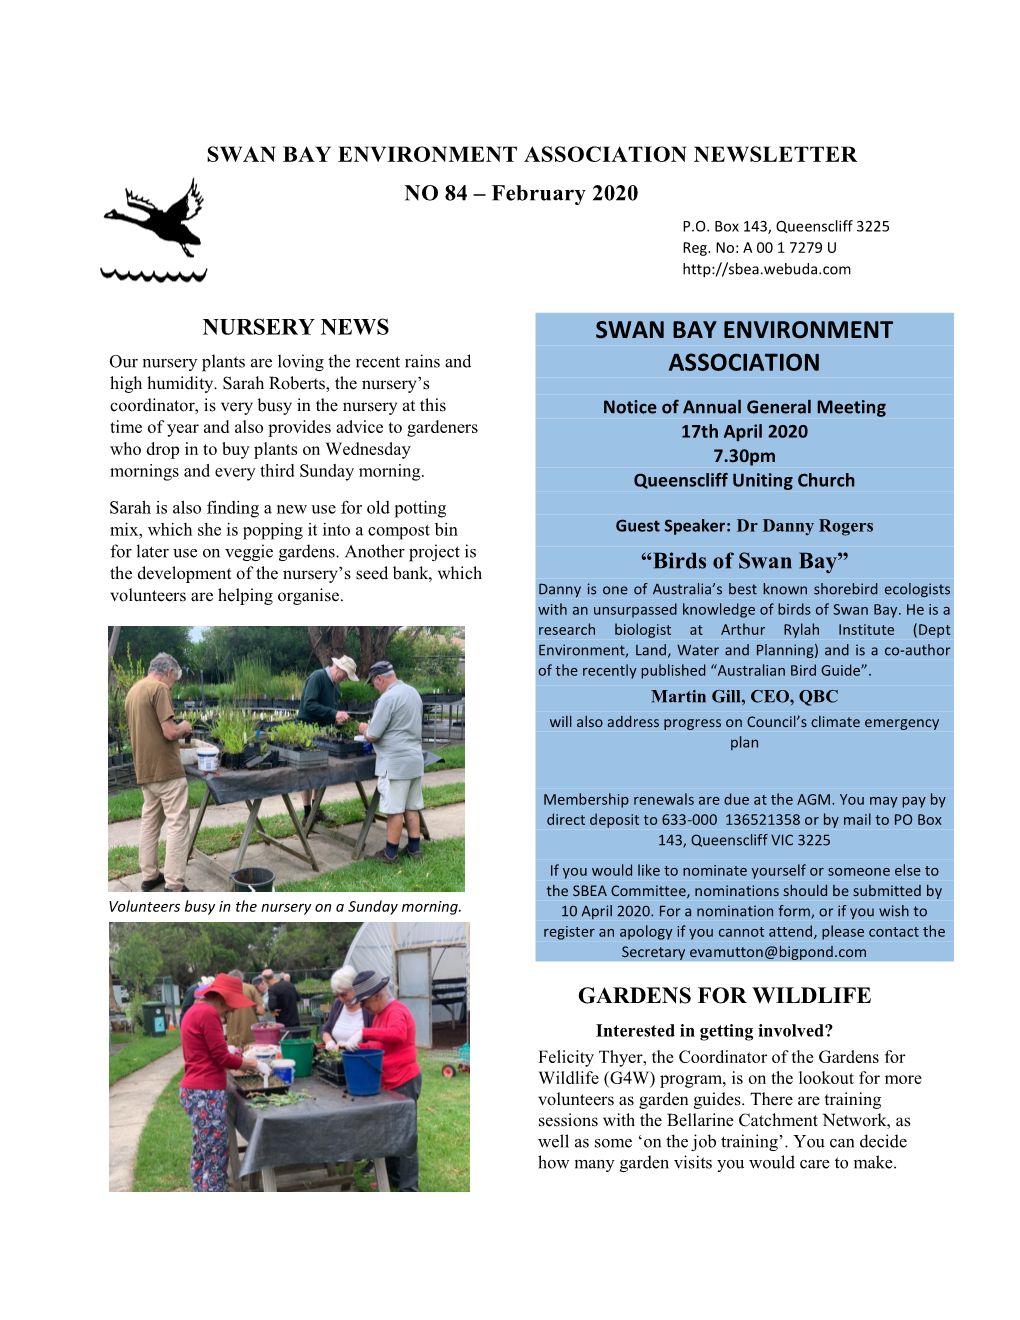 SWAN BAY ENVIRONMENT ASSOCIATION NEWSLETTER NO 84 – February 2020 P.O